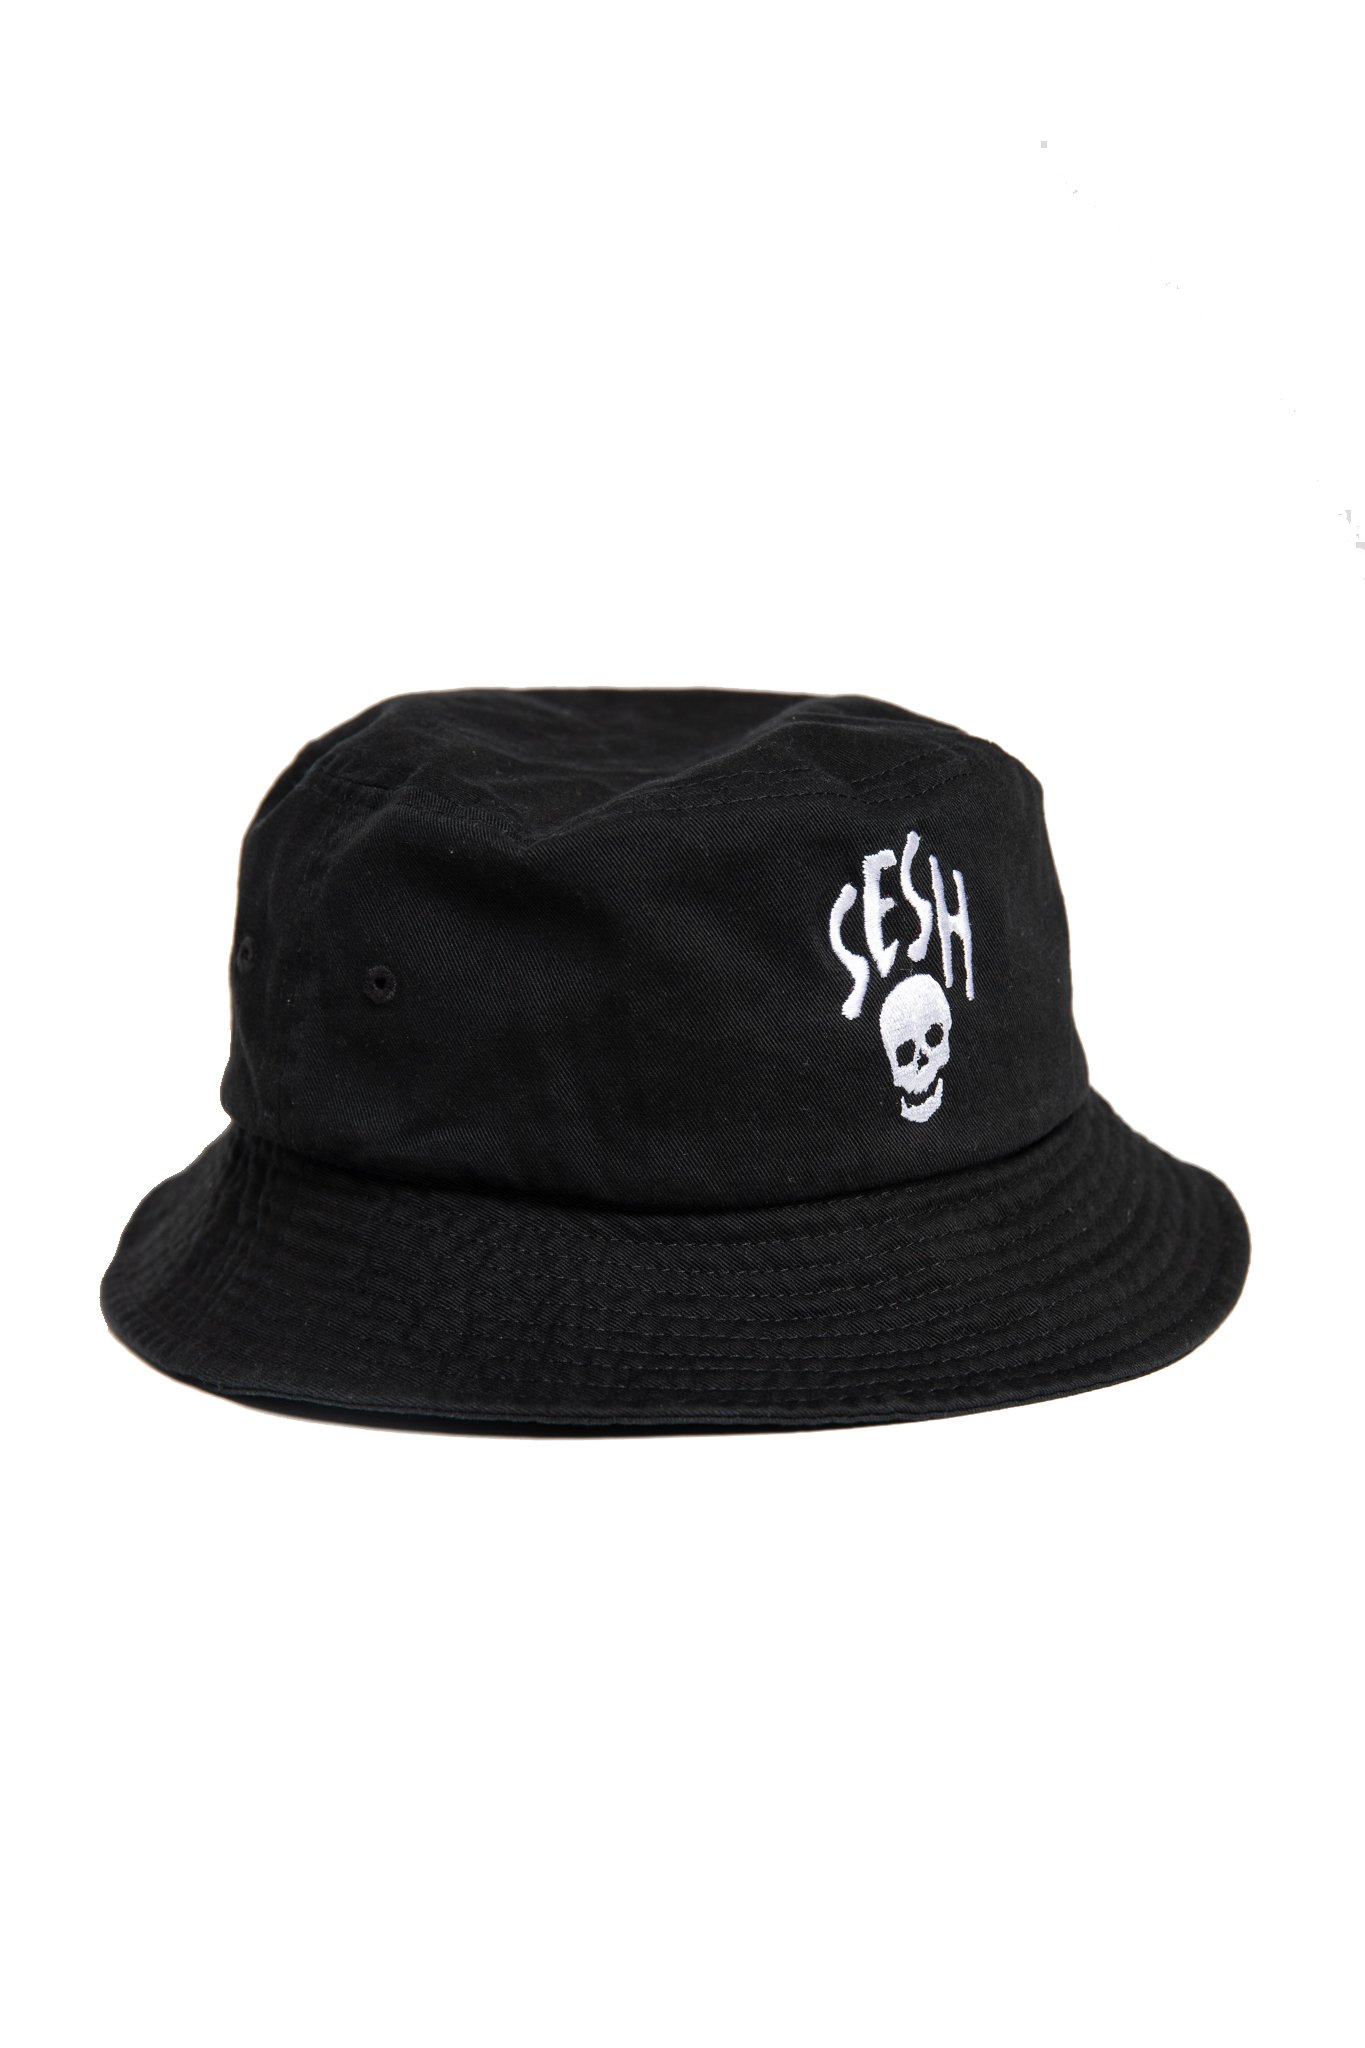 TeamSESH — Seshskull embroidered Bucket hat